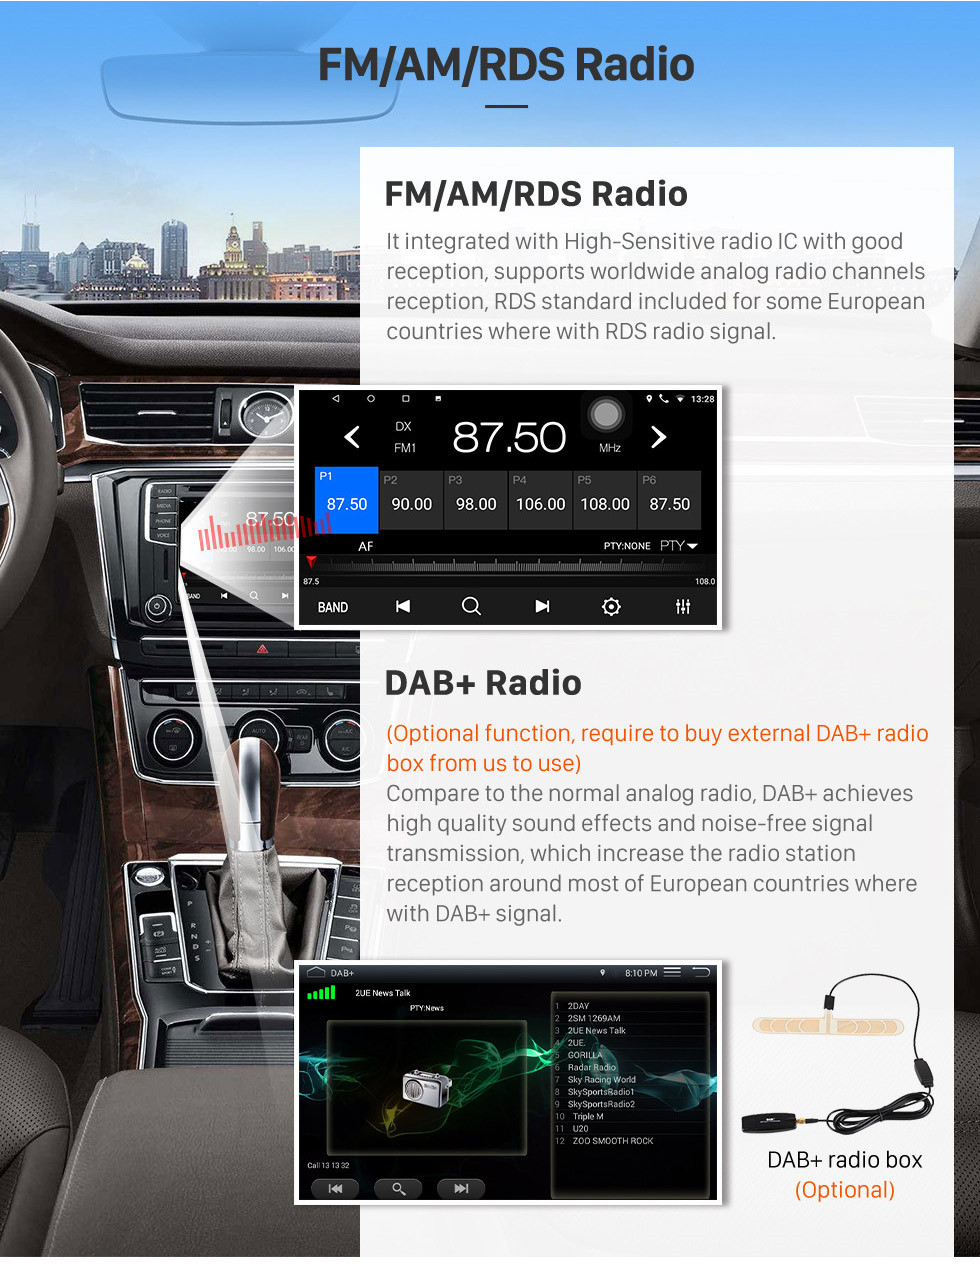 Seicane OEM 9 Zoll Android 10.0 Radio für 2018-2019 Hyundai i20 RHD Bluetooth Wifi HD Touchscreen GPS Navigationsunterstützung Carplay DVR OBD Rückfahrkamera